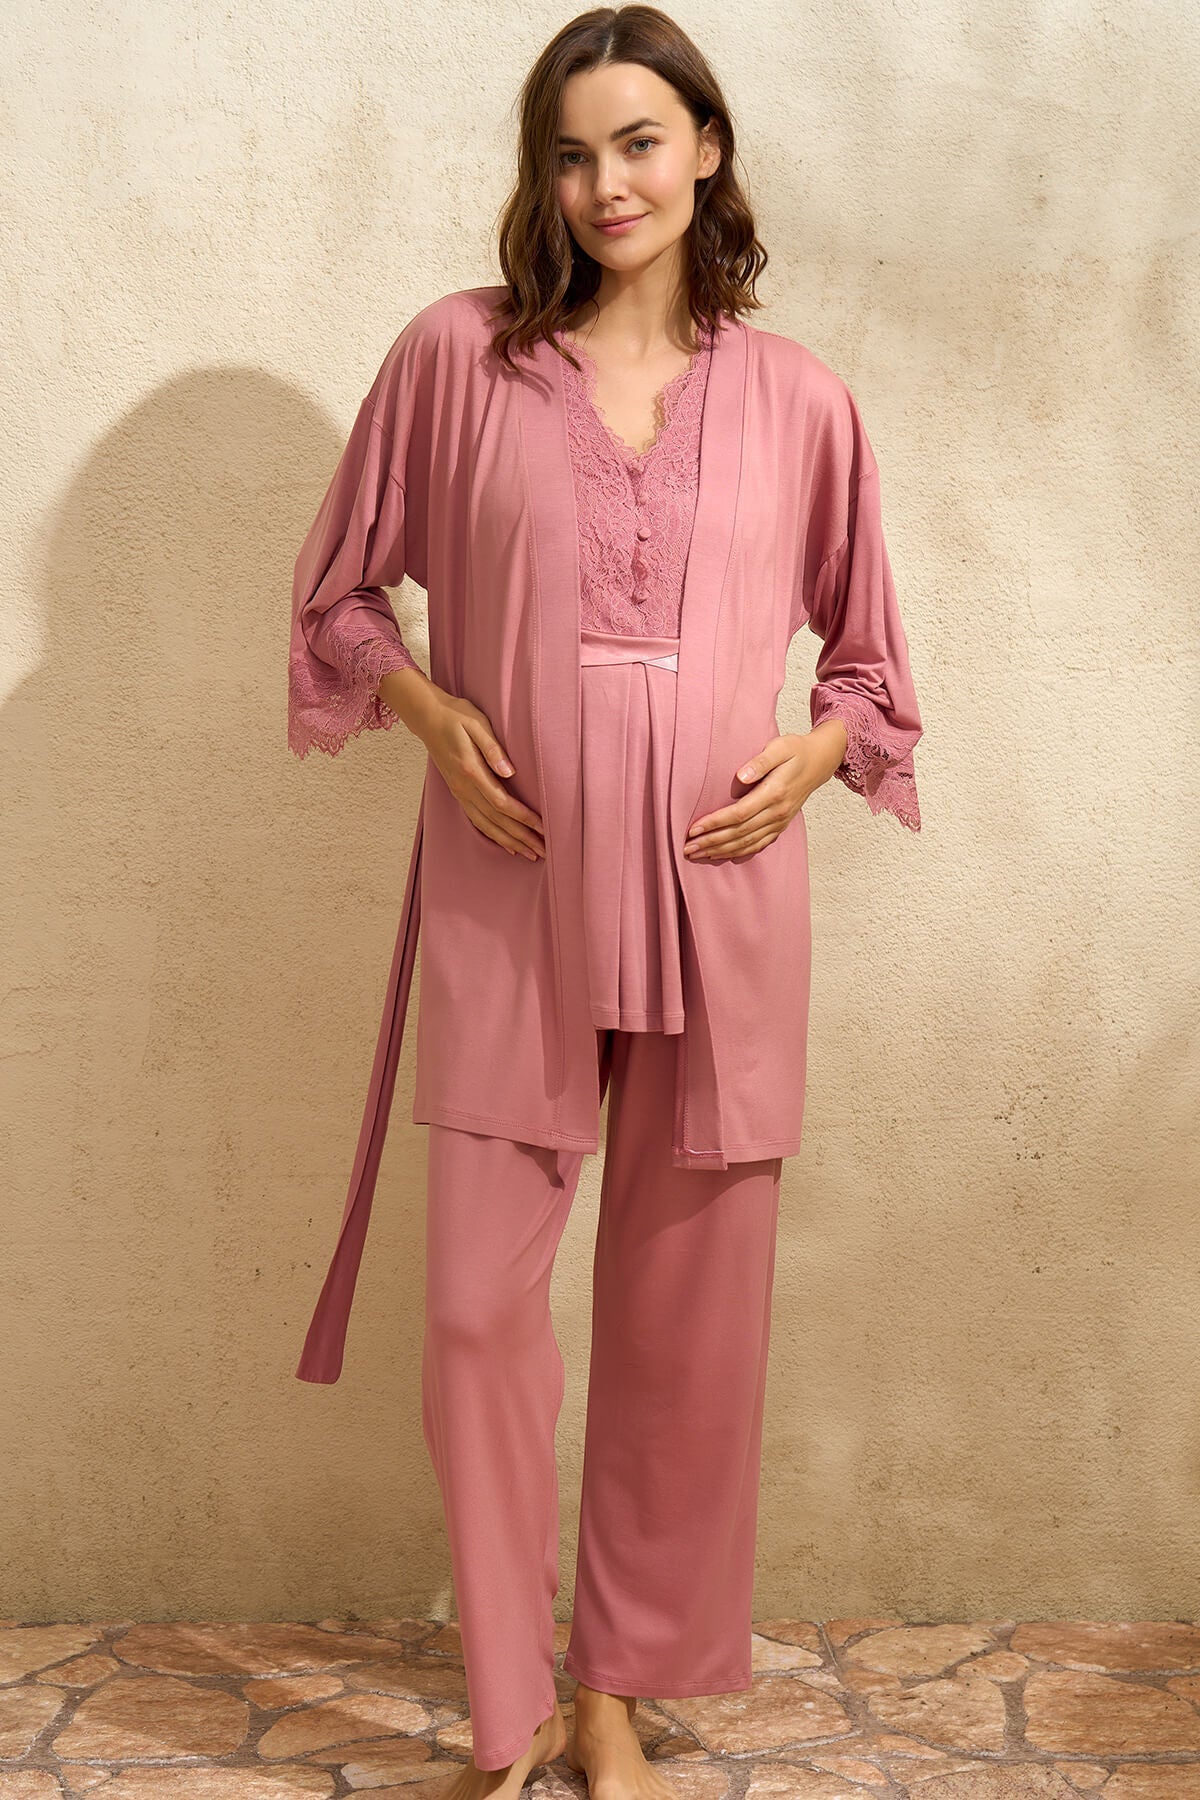 Lace Detailed 3-Pieces Maternity & Nursing Pajamas With Robe Dried Rose - 5771